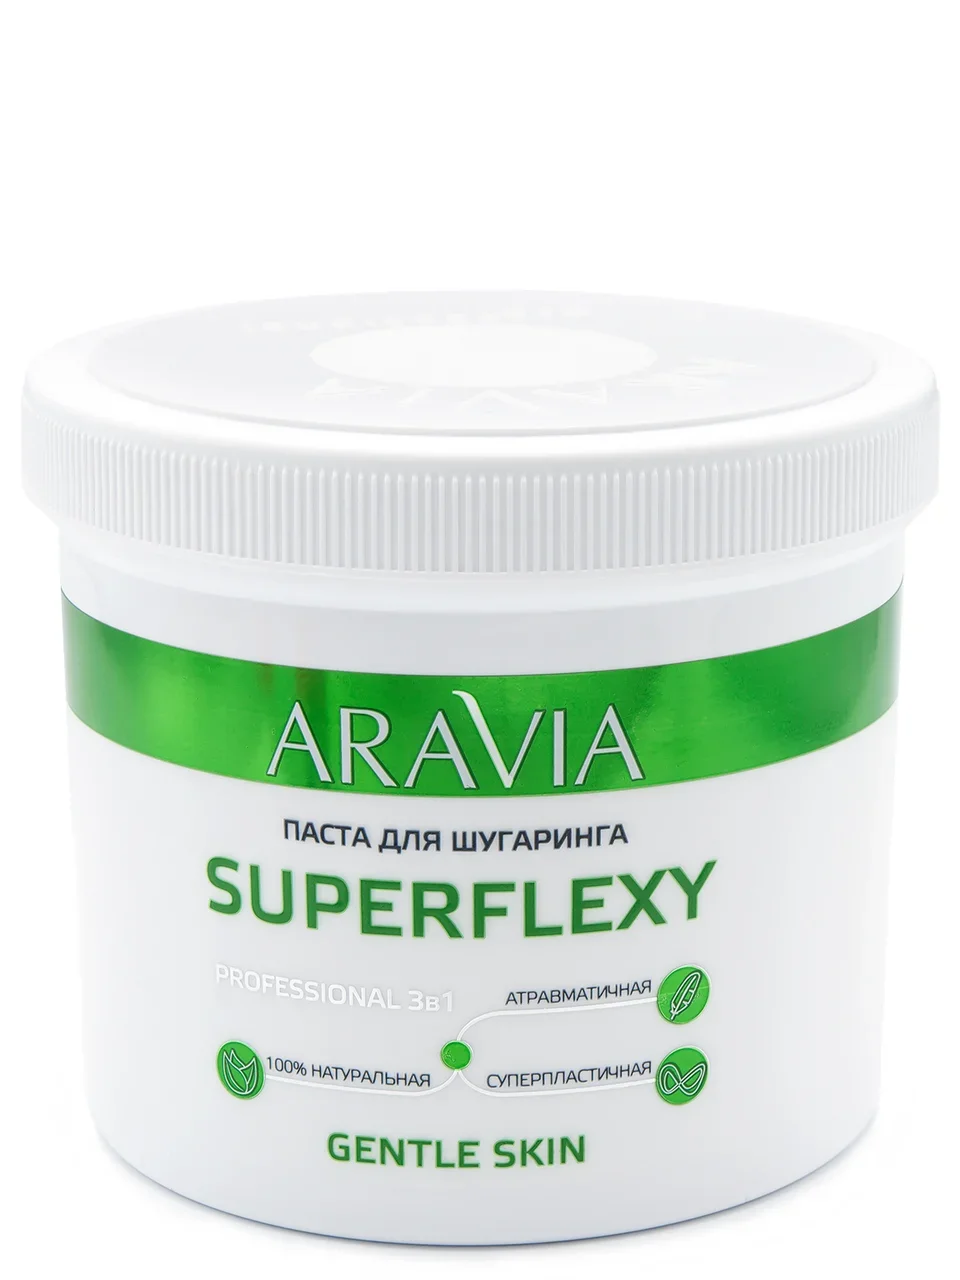 Паста для шугаринга Aravia Professional Superflexy Gentle Skin 750 г паста для шугаринга superflexy ultra enzyme 1070 750 г